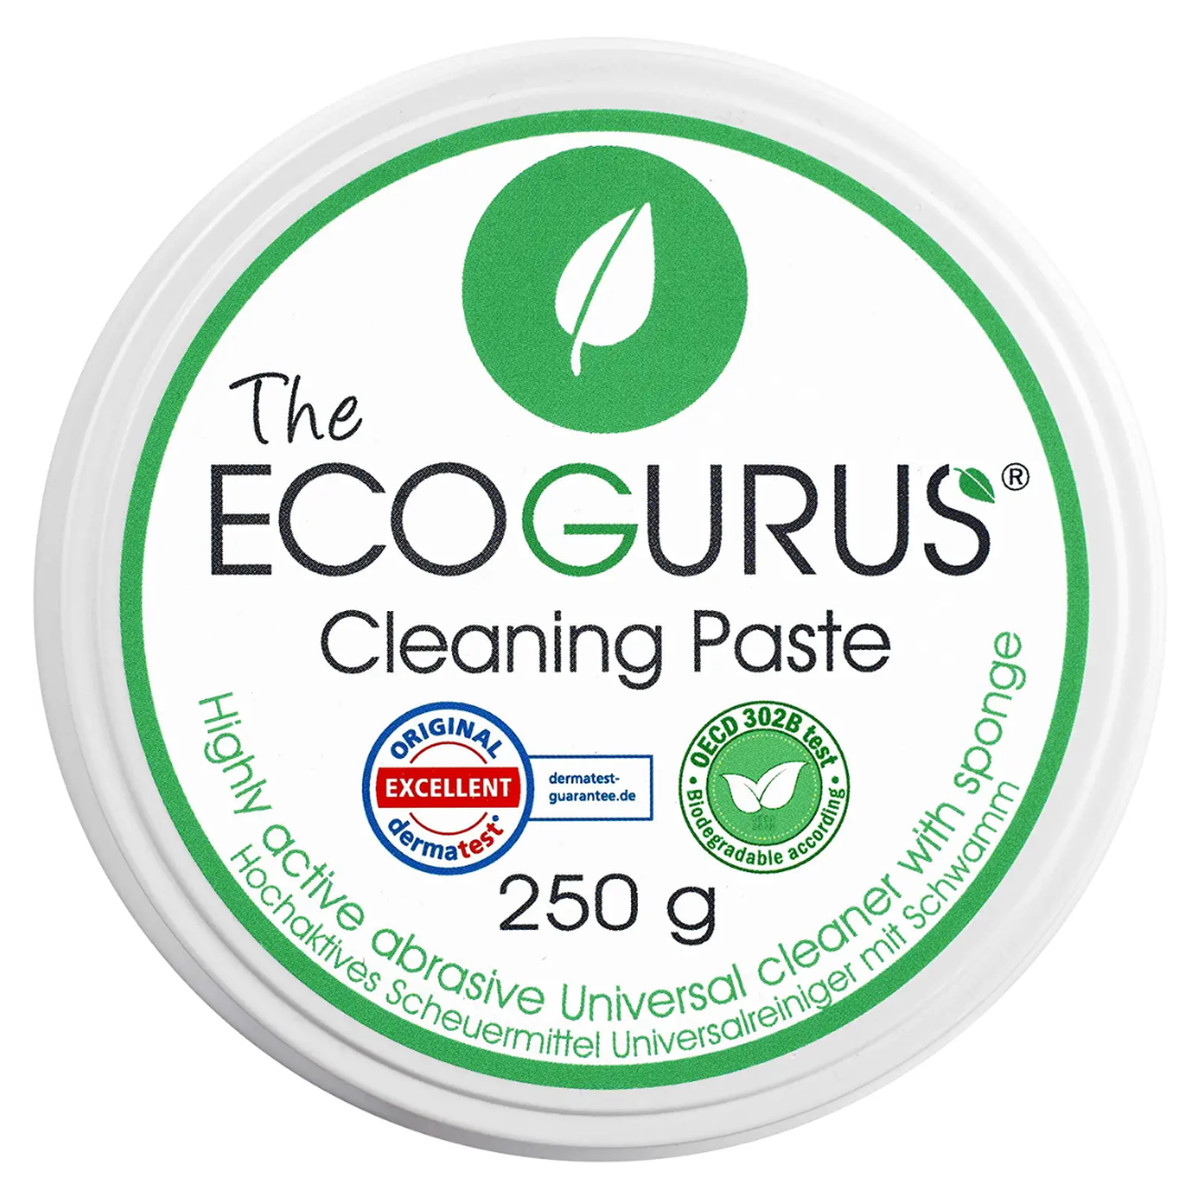 The EcoGurus Cleaning Paste